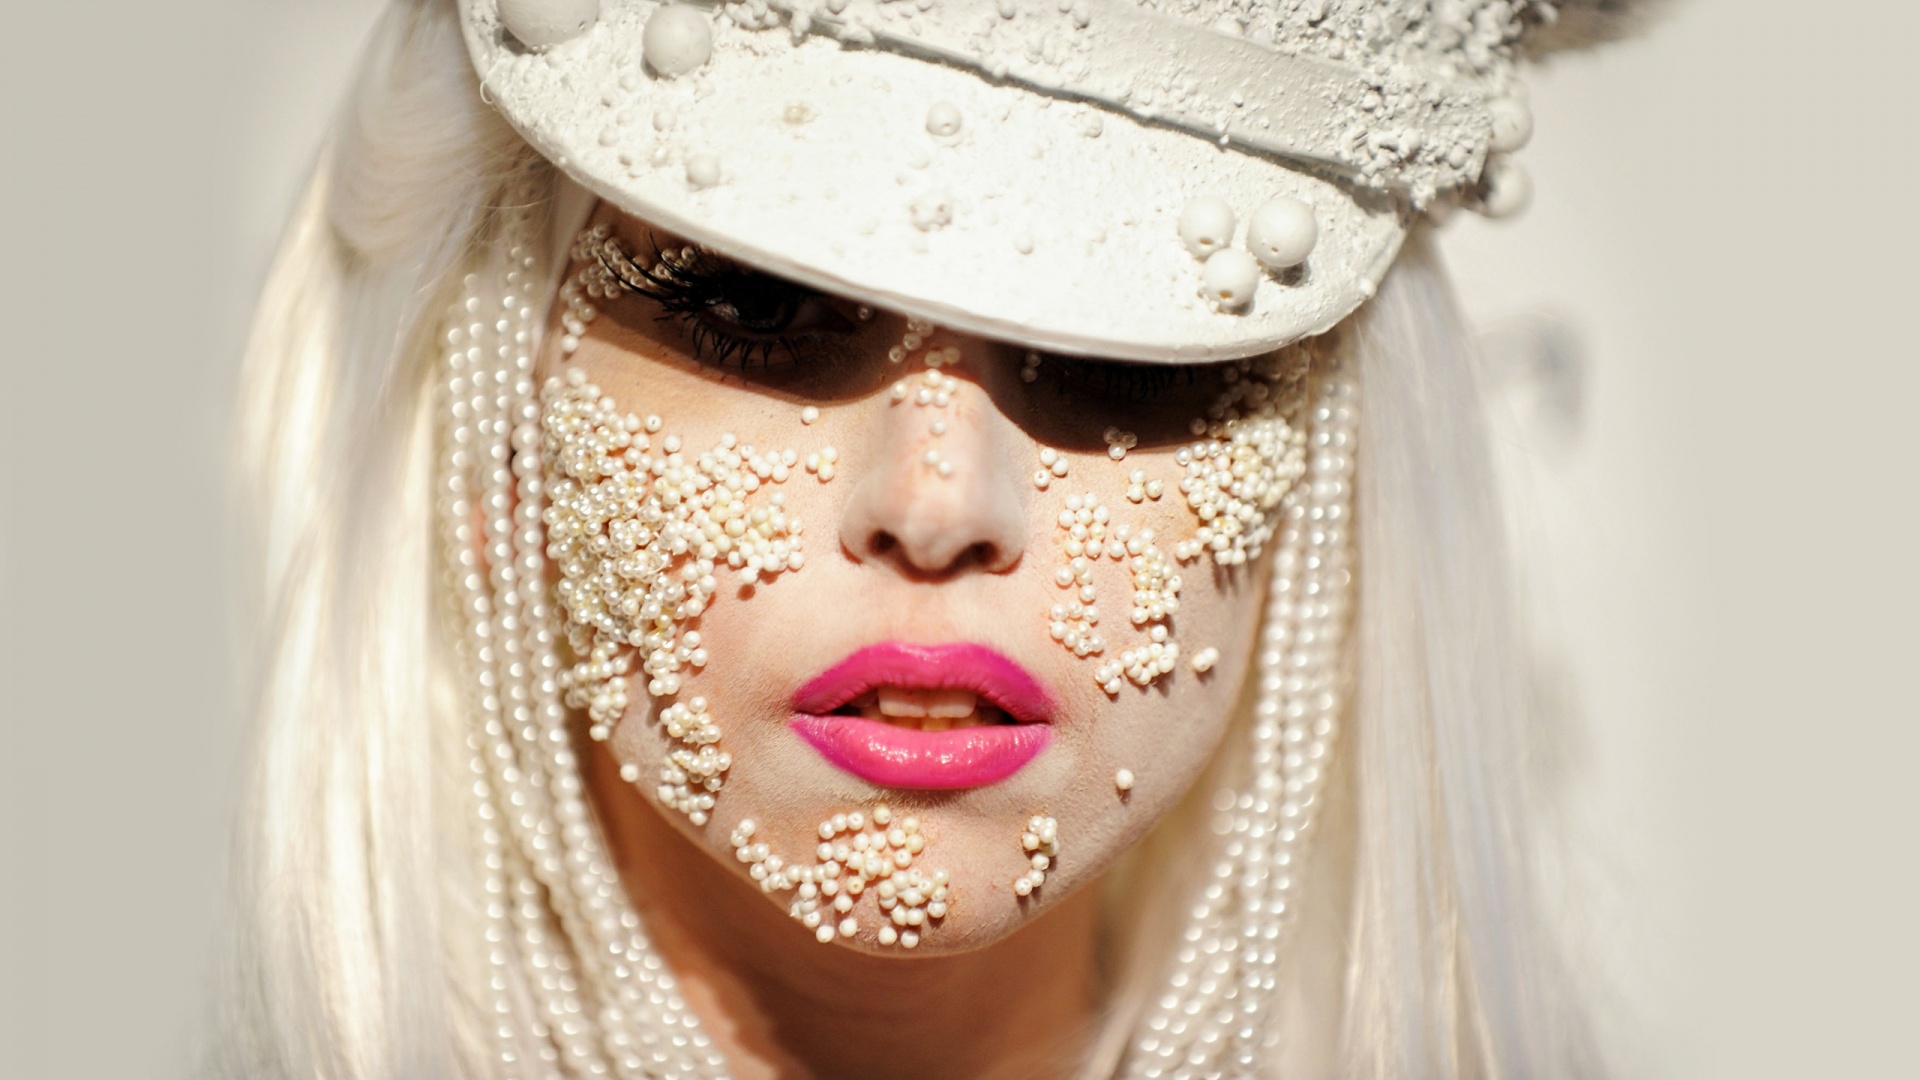 American Pop Singer Lady Gaga Wallpaper In Jpg Format For